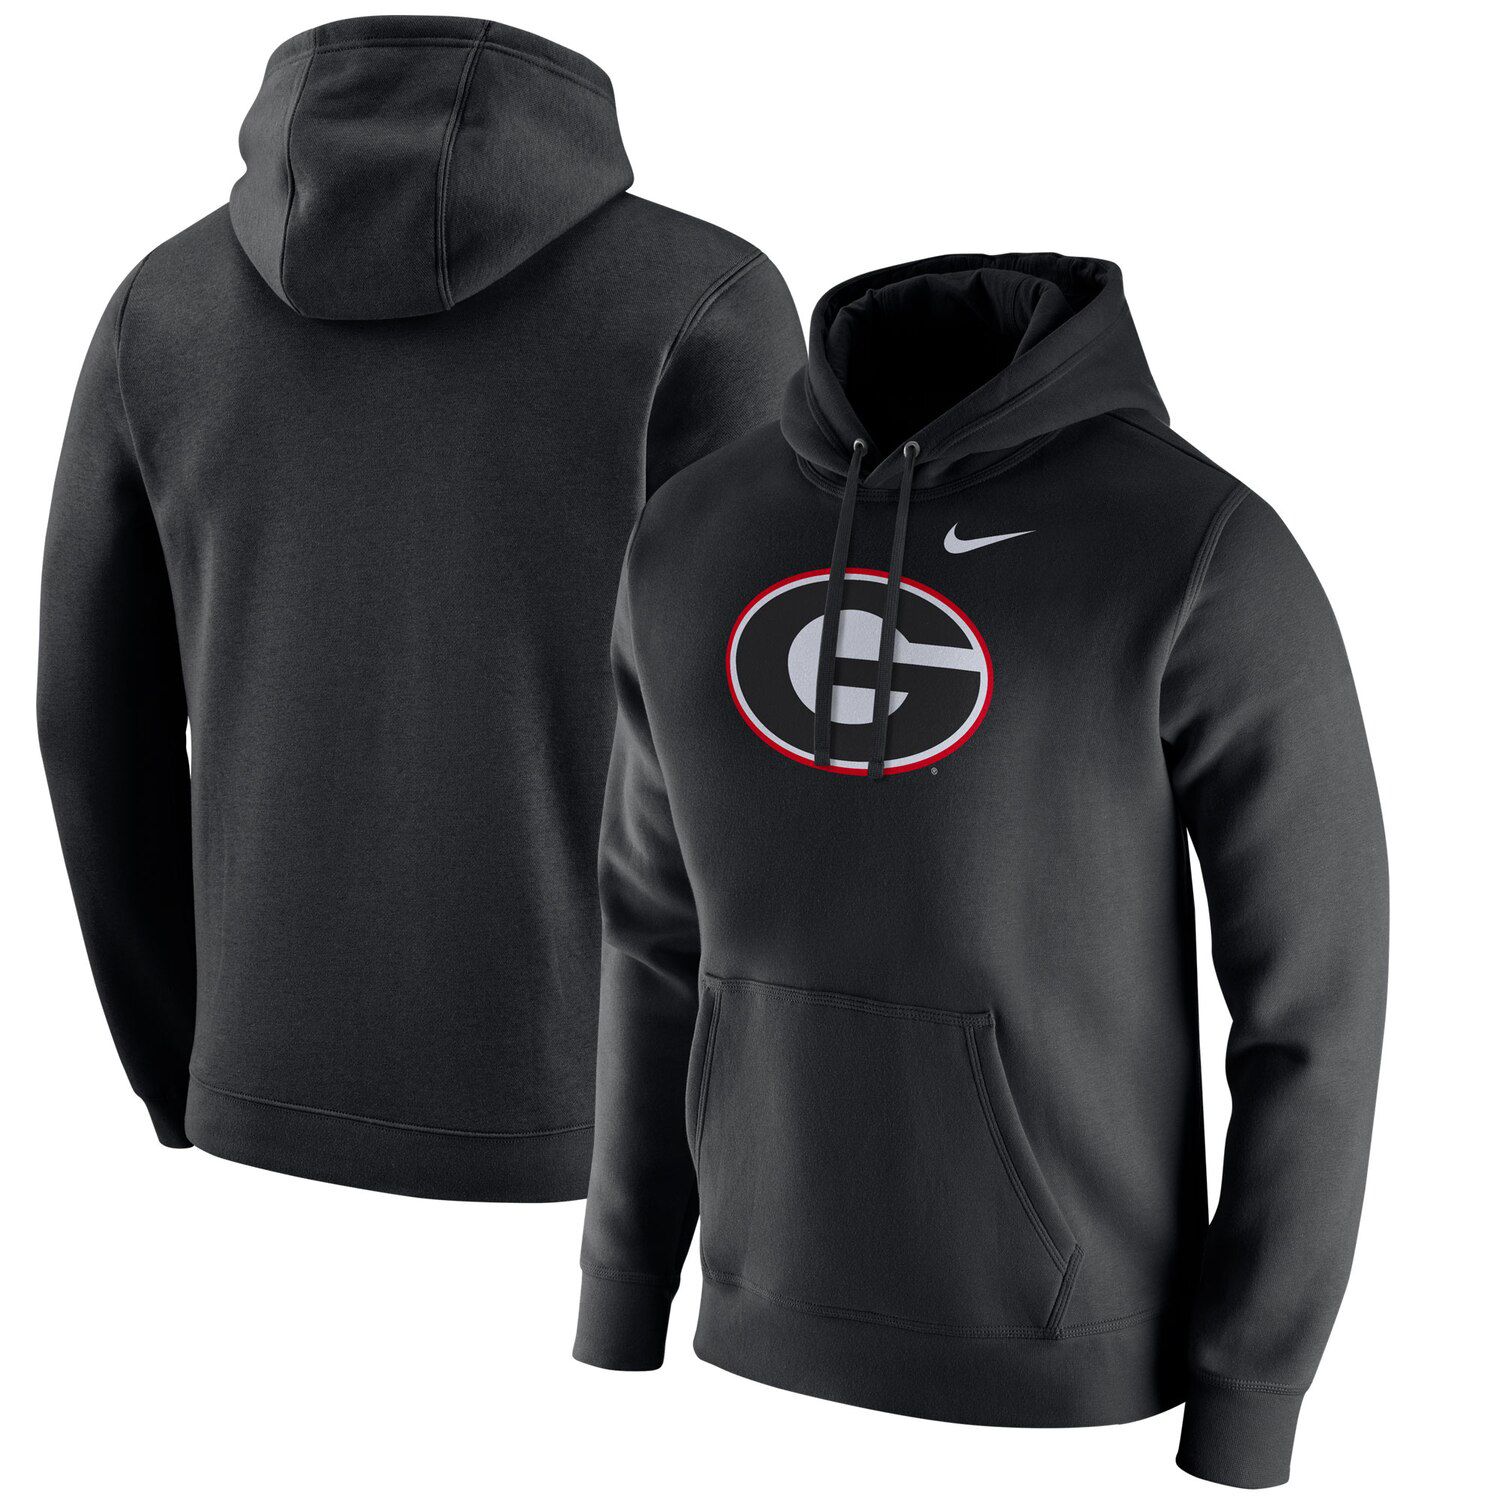 Men's Nike Black Georgia Bulldogs Logo 